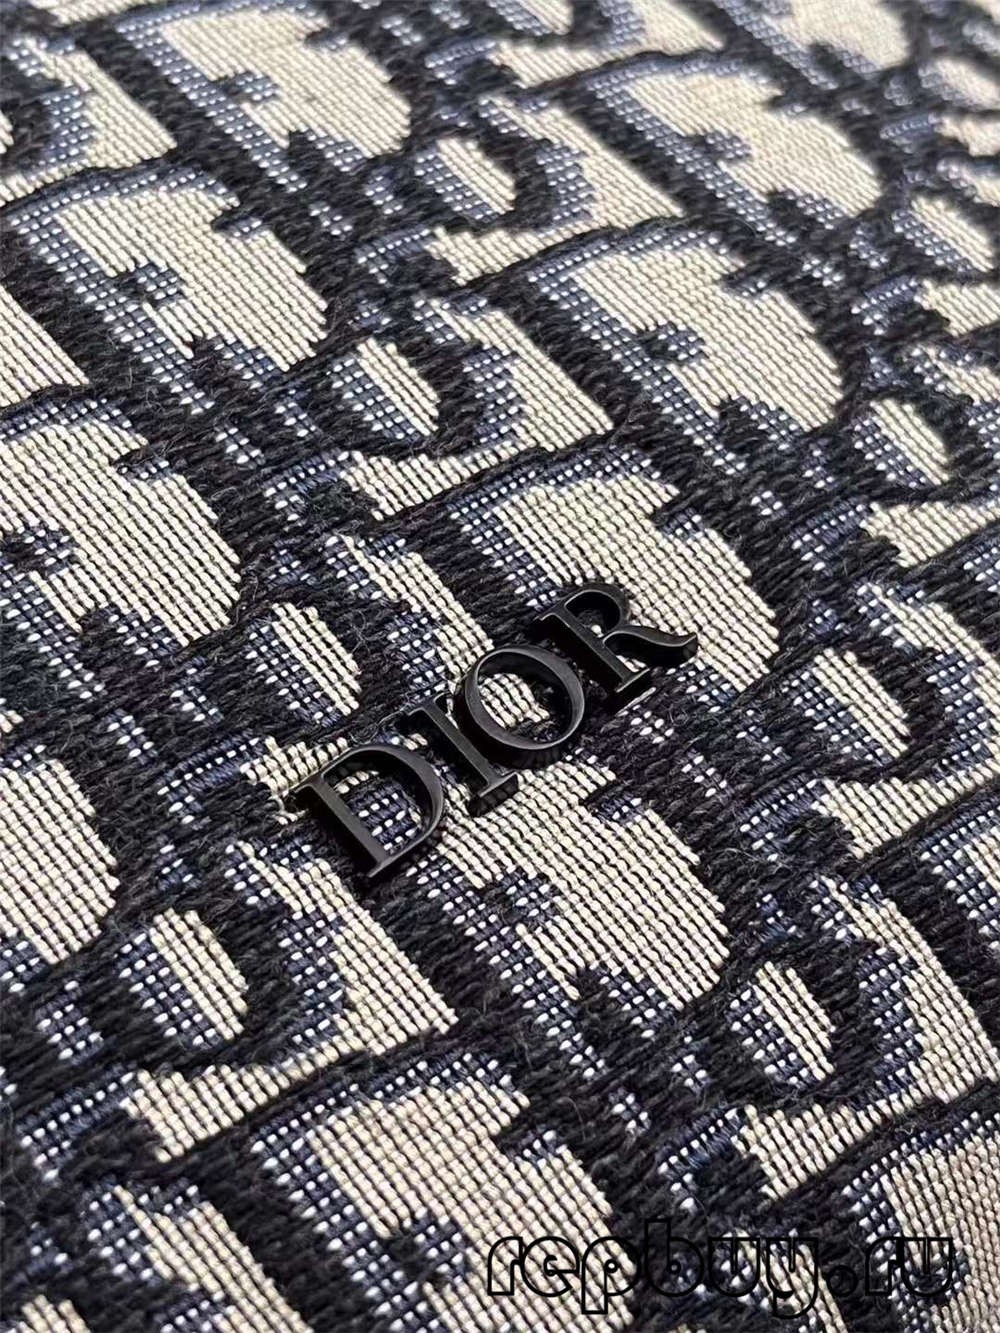 Dior top replica duffel bag blue embroidery Oblique print details (2022 Edition)-Best Quality Fake Louis Vuitton Bag Online Store, Replica designer bag ru